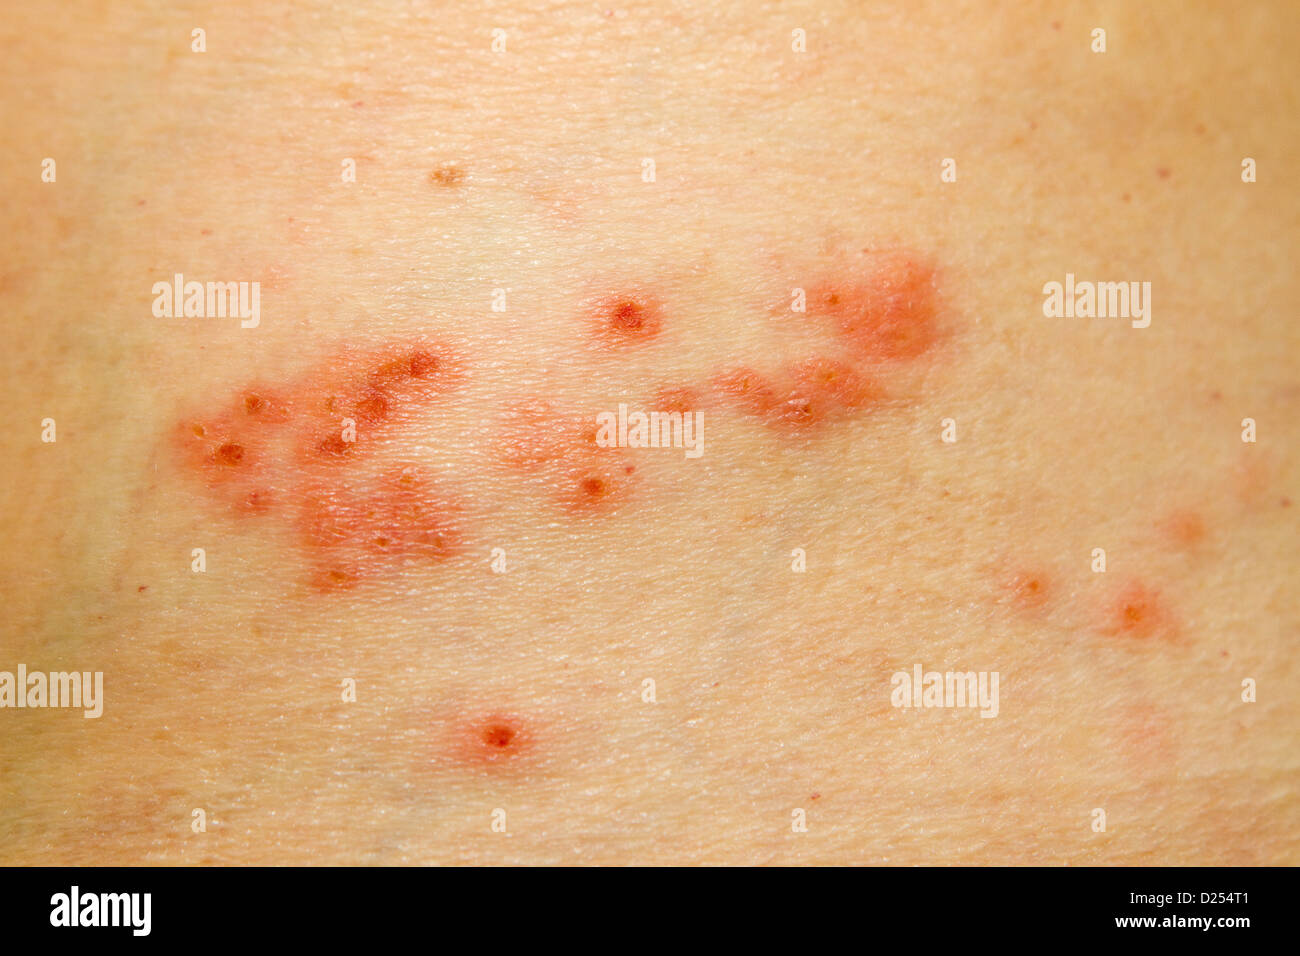 Mild case of shingles rash on the side of the body Stock Photo - Alamy